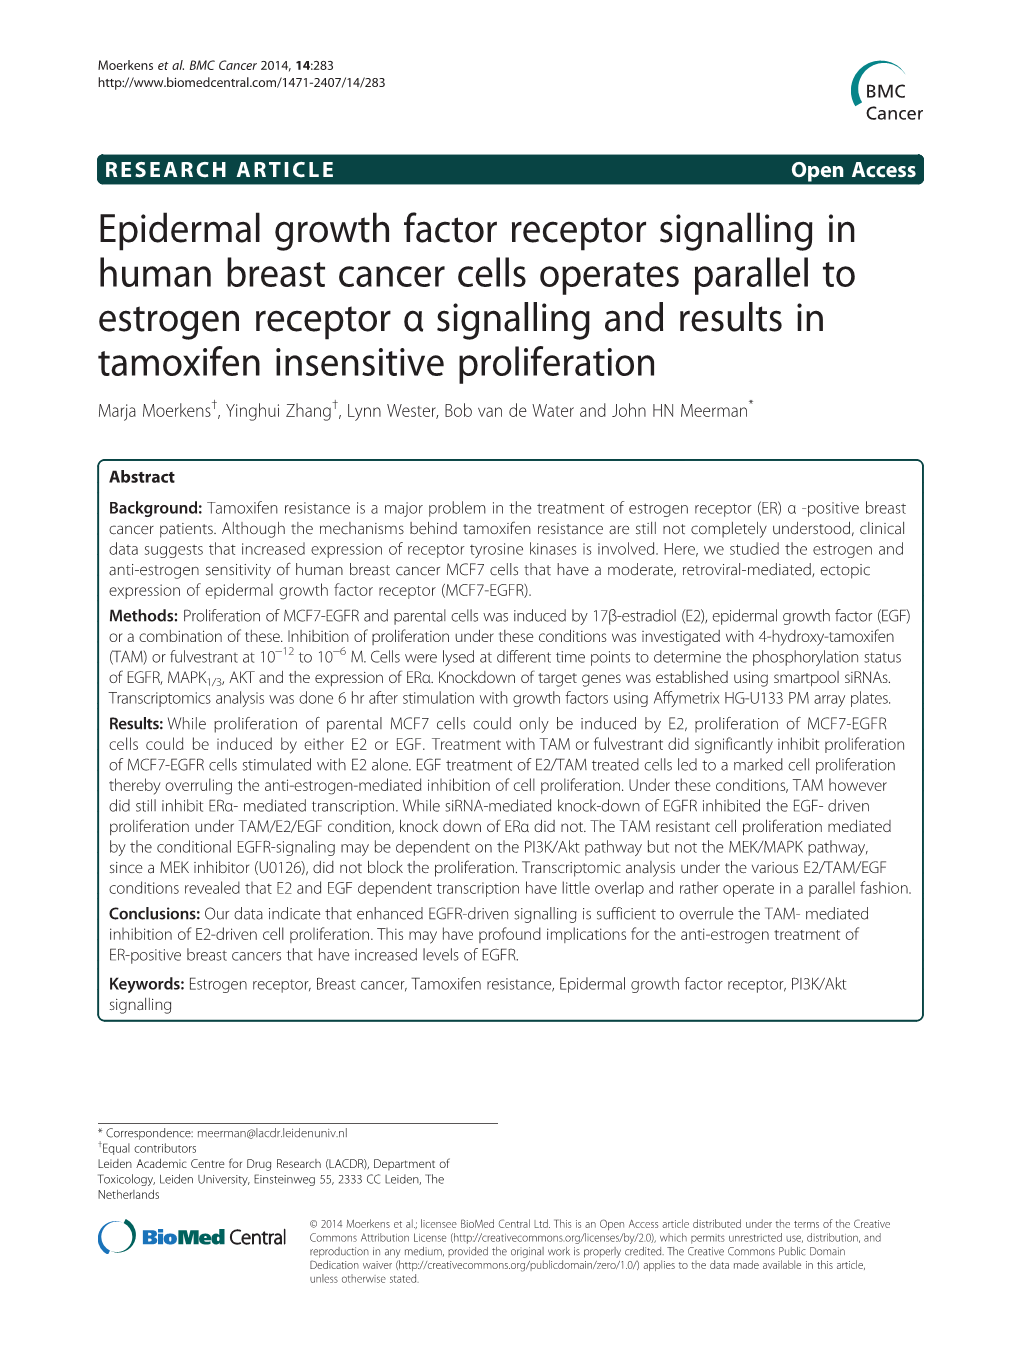 Epidermal Growth Factor Receptor Signalling in Human Breast Cancer